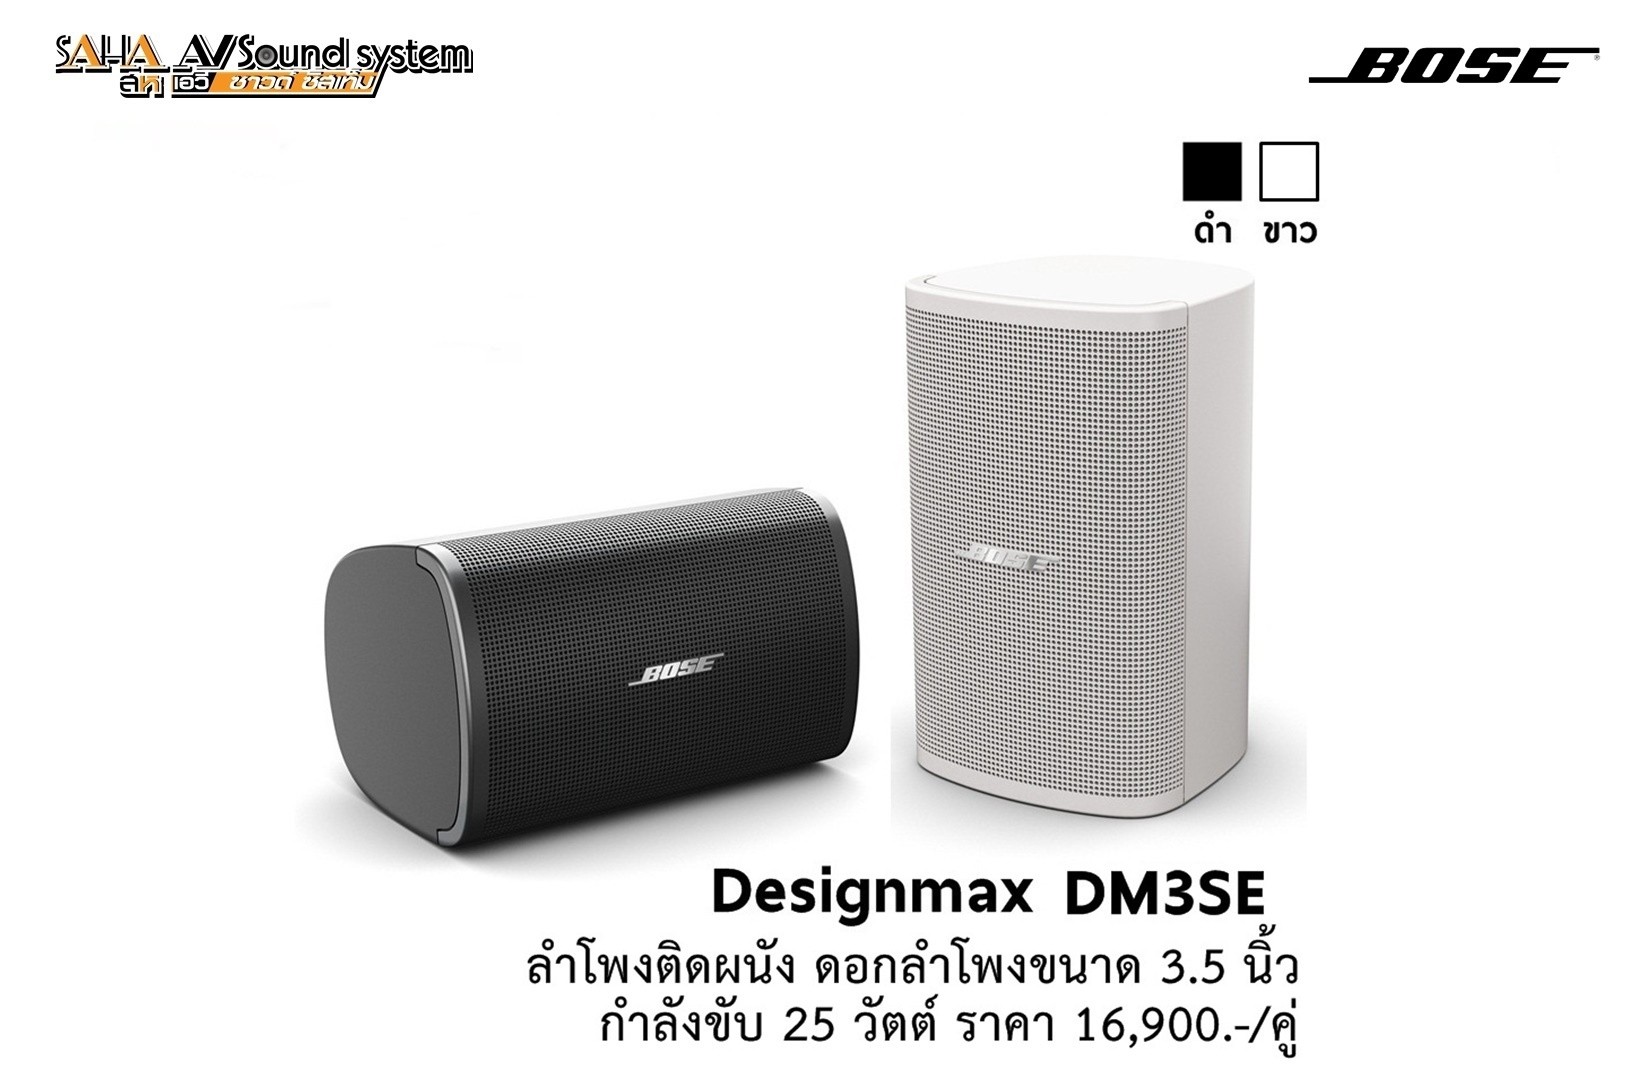 sahaav BOSE DesignMax DM3SE ลำโพงติดผนัง 3.5 นิ้ว 100 วัตต์